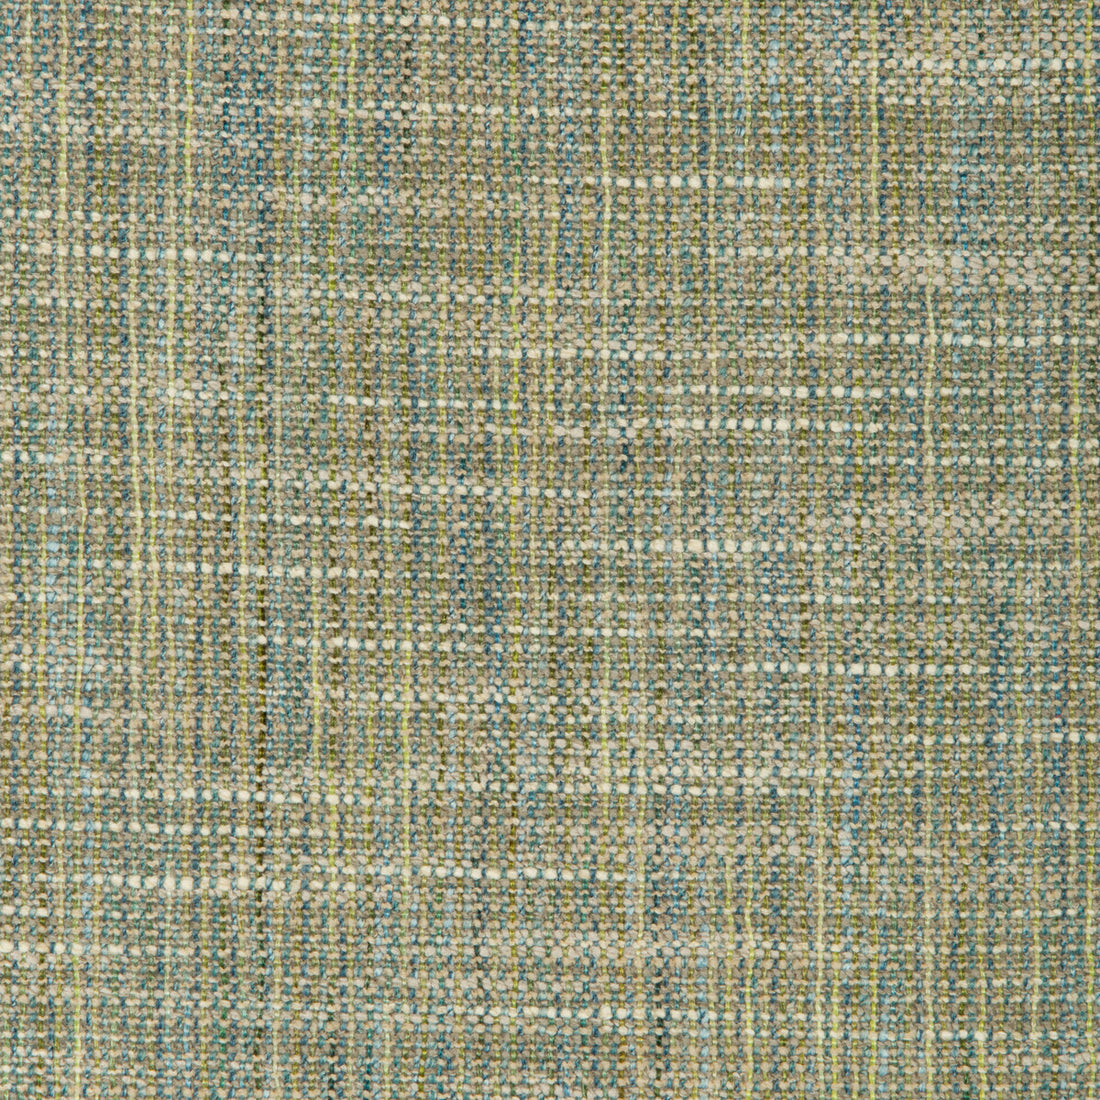 Kravet Smart fabric in 35326-513 color - pattern 35326.513.0 - by Kravet Smart in the Performance Kravetarmor collection